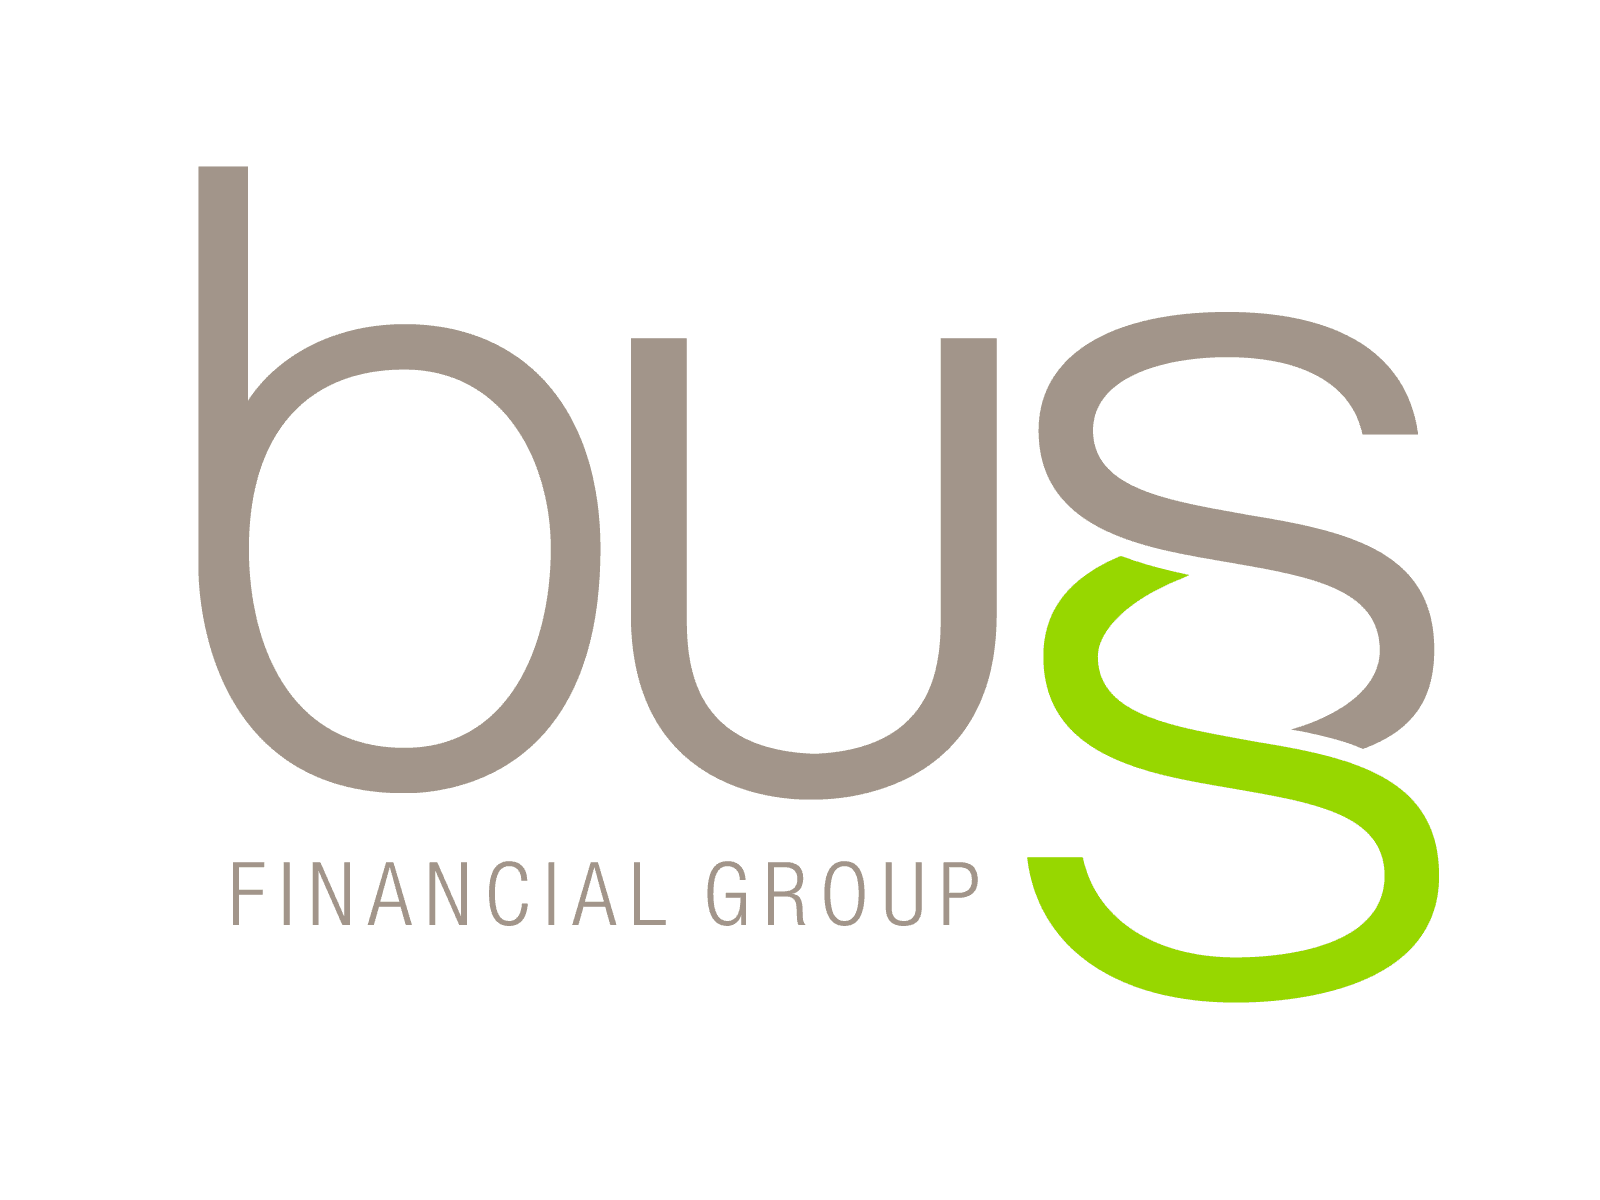 Buss Financial Group